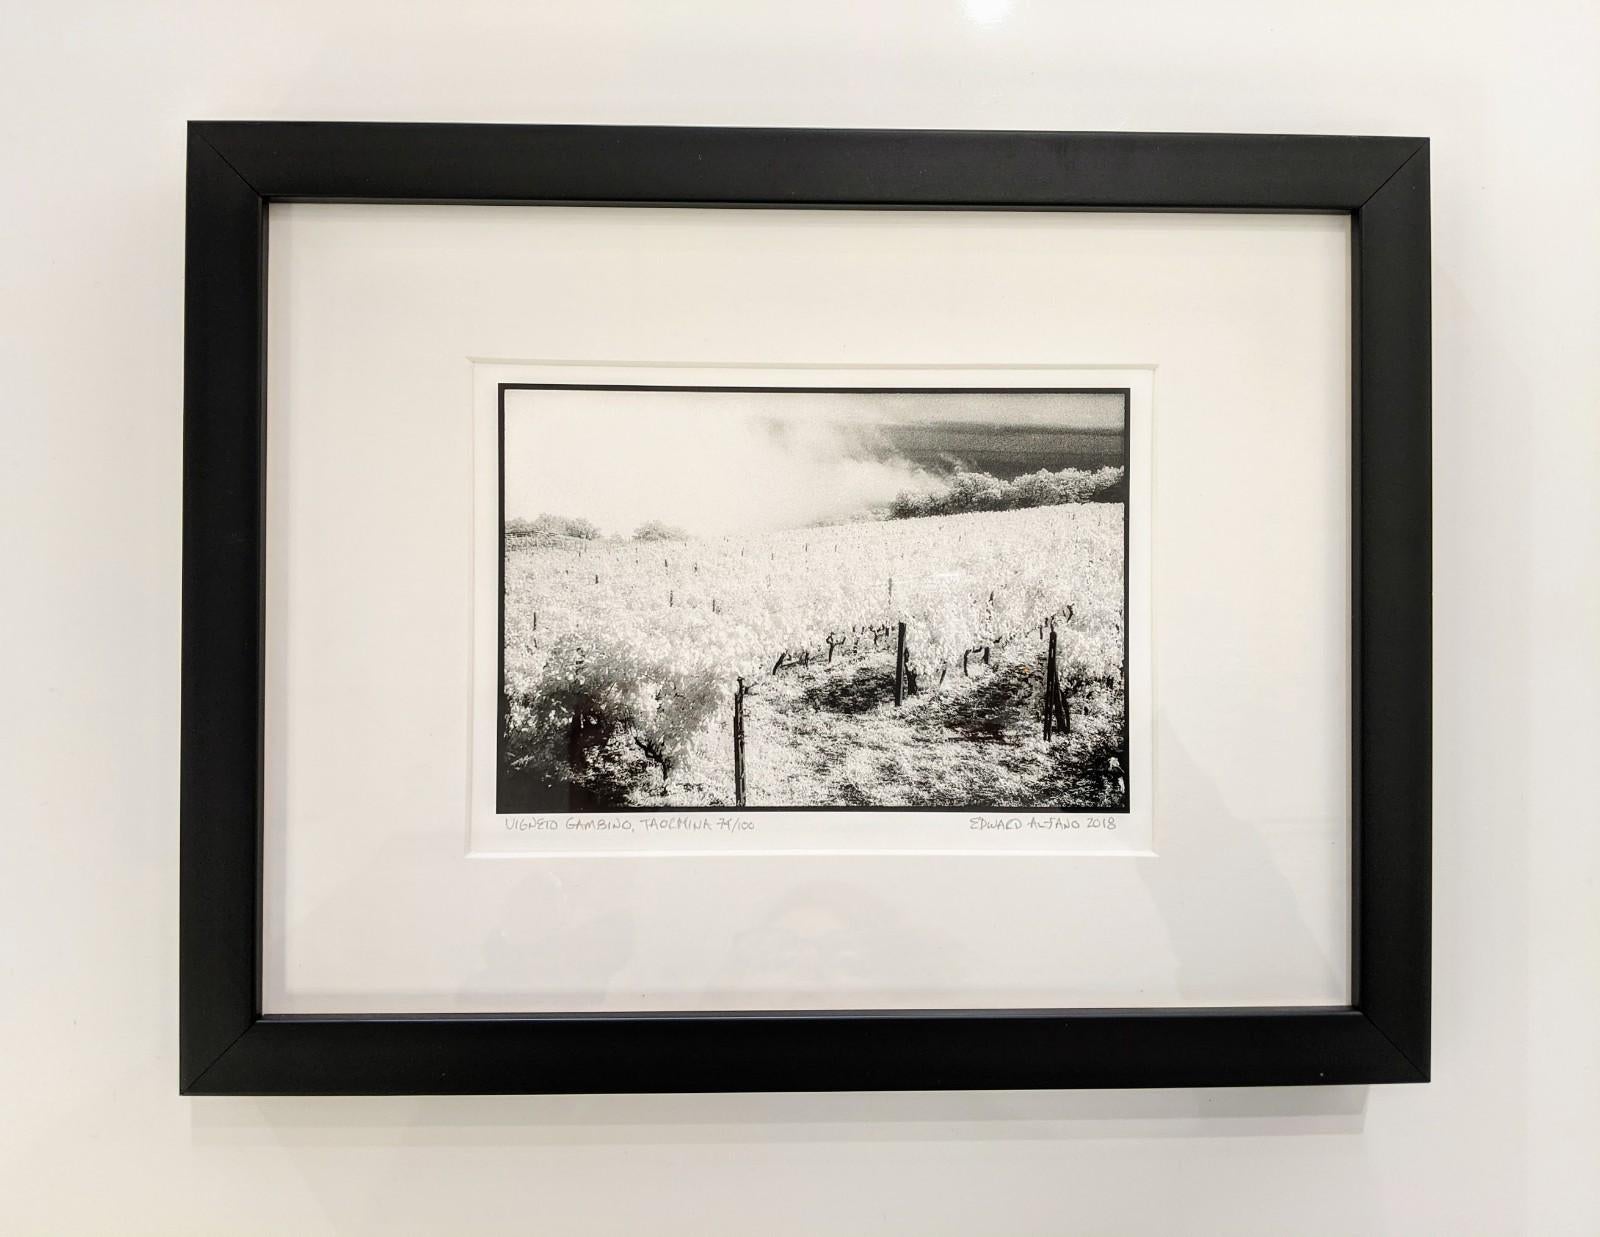 Vigneto Gambino, Taormina, Sicilia - Black & White Landscape of Italian Vineyard - Photograph by Edward Alfano